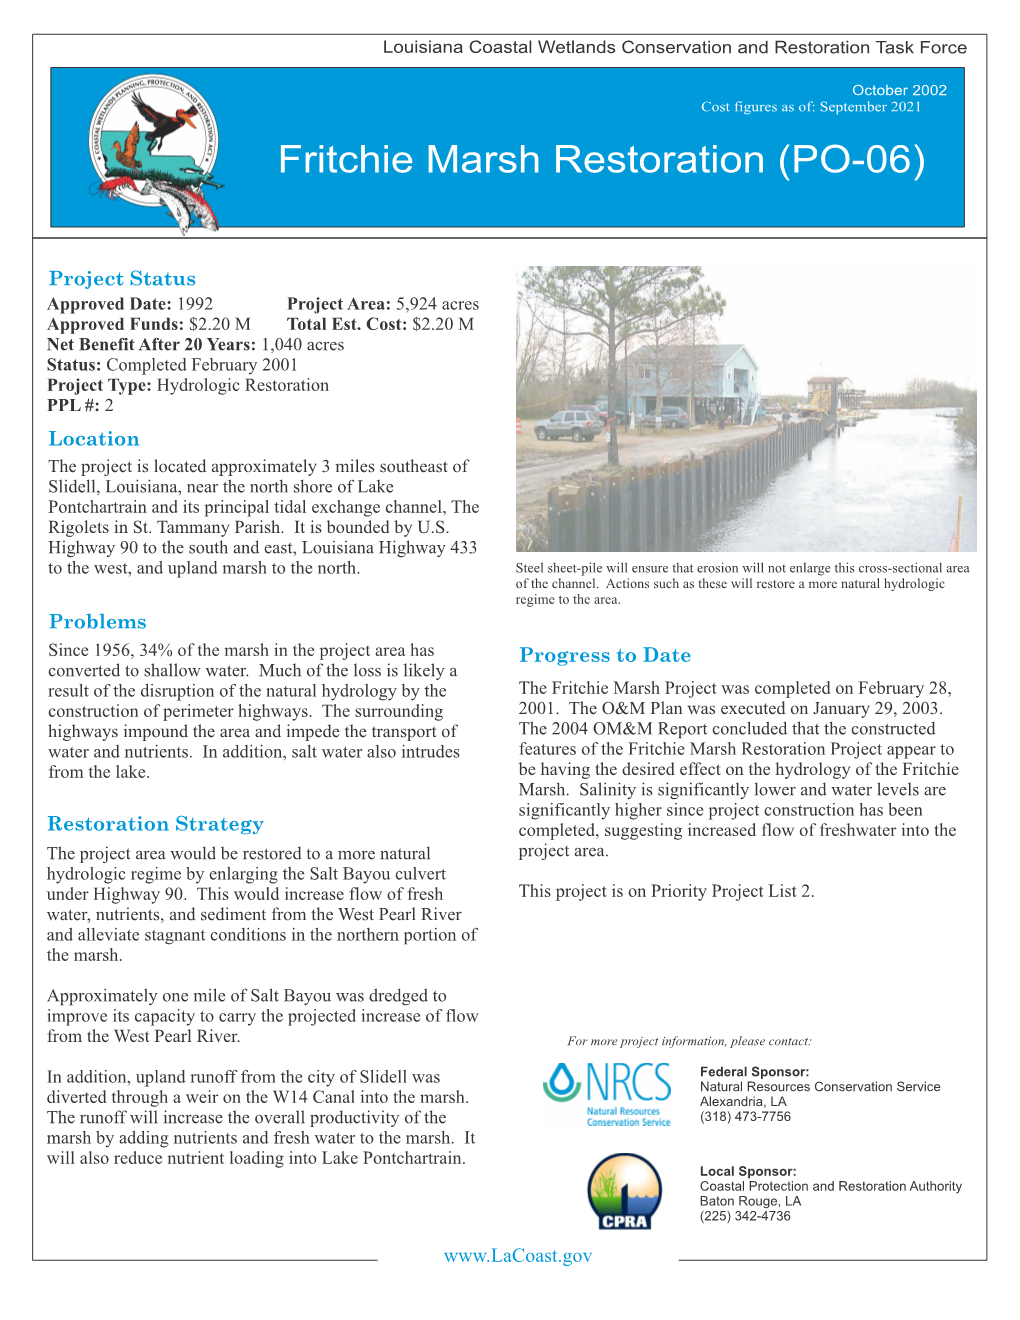 PO 06 Fritchie Marsh Restoration Prep.Cdr